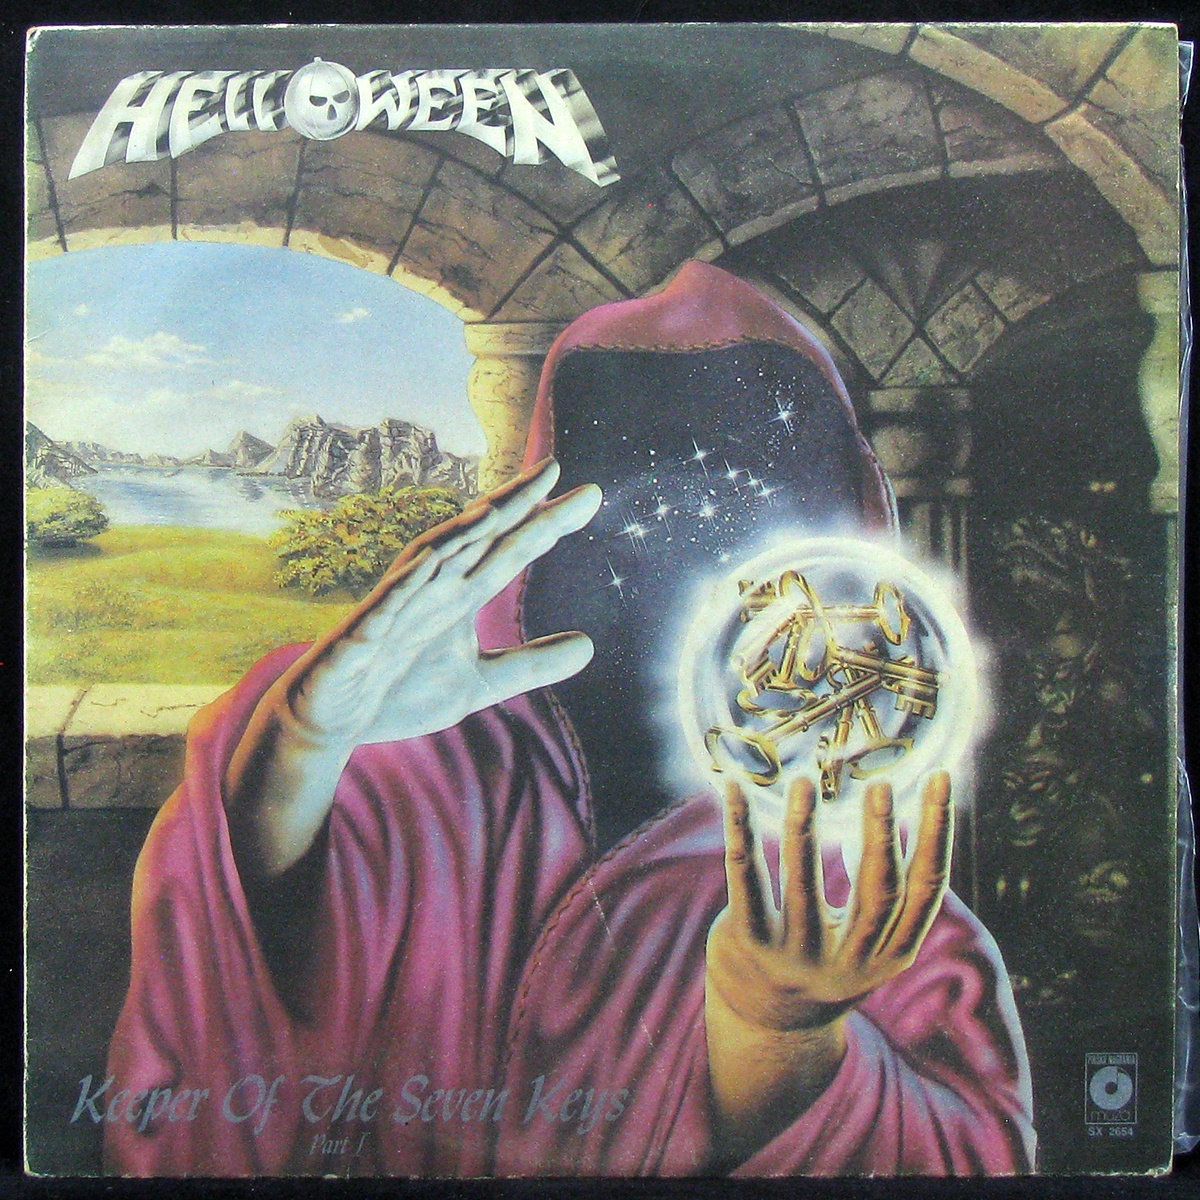 LP Helloween — Keeper Of The Seven Keys Part I фото